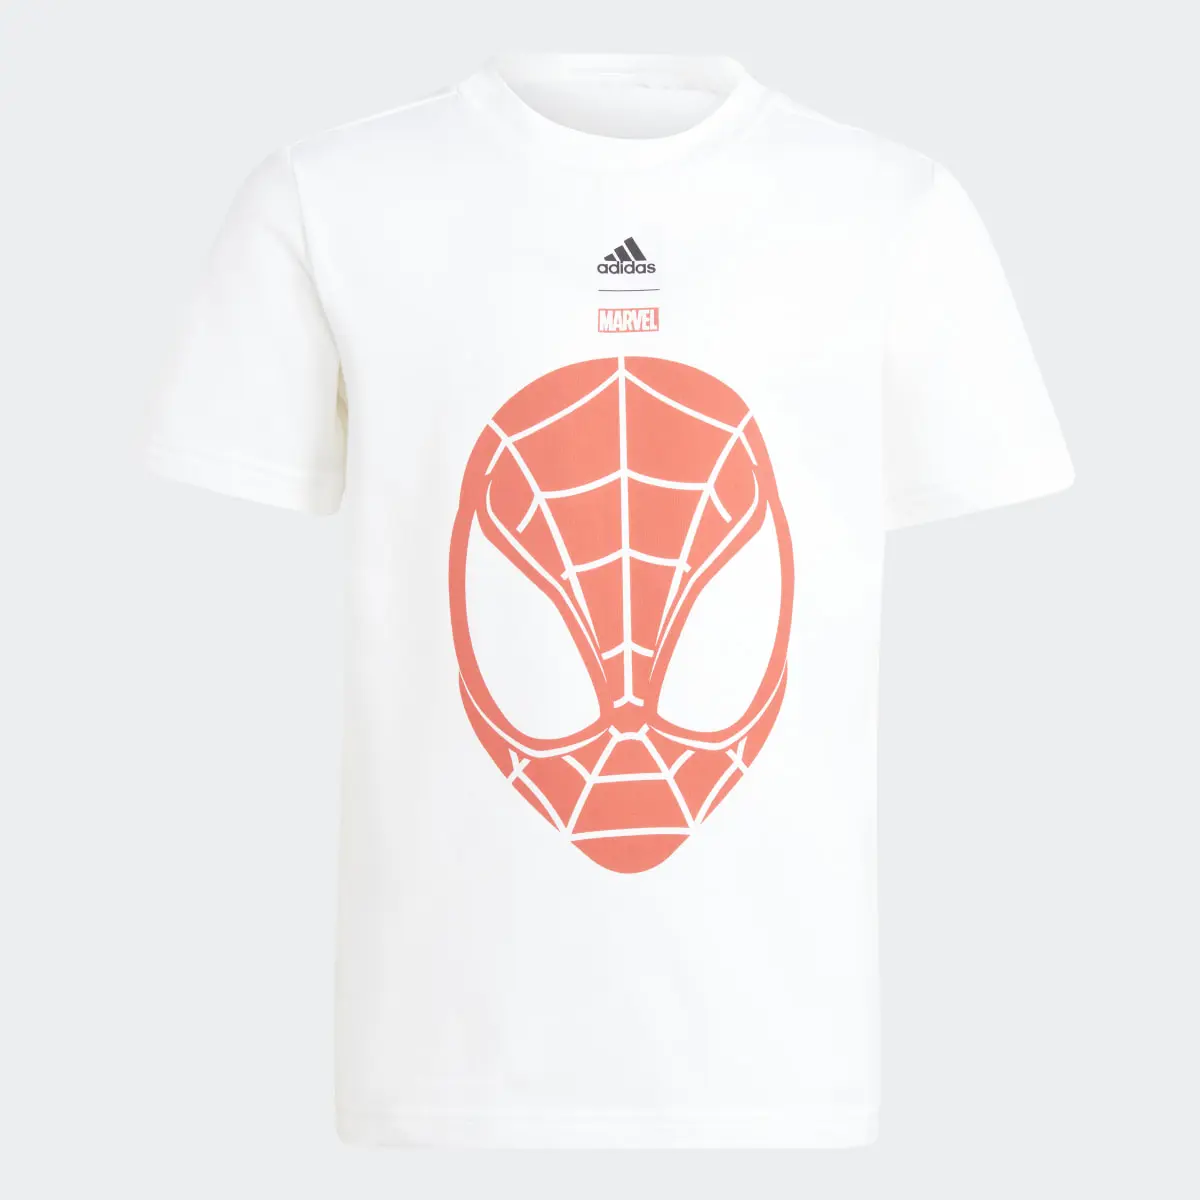 Adidas x Marvel Spider-Man Tee and Shorts Set. 2